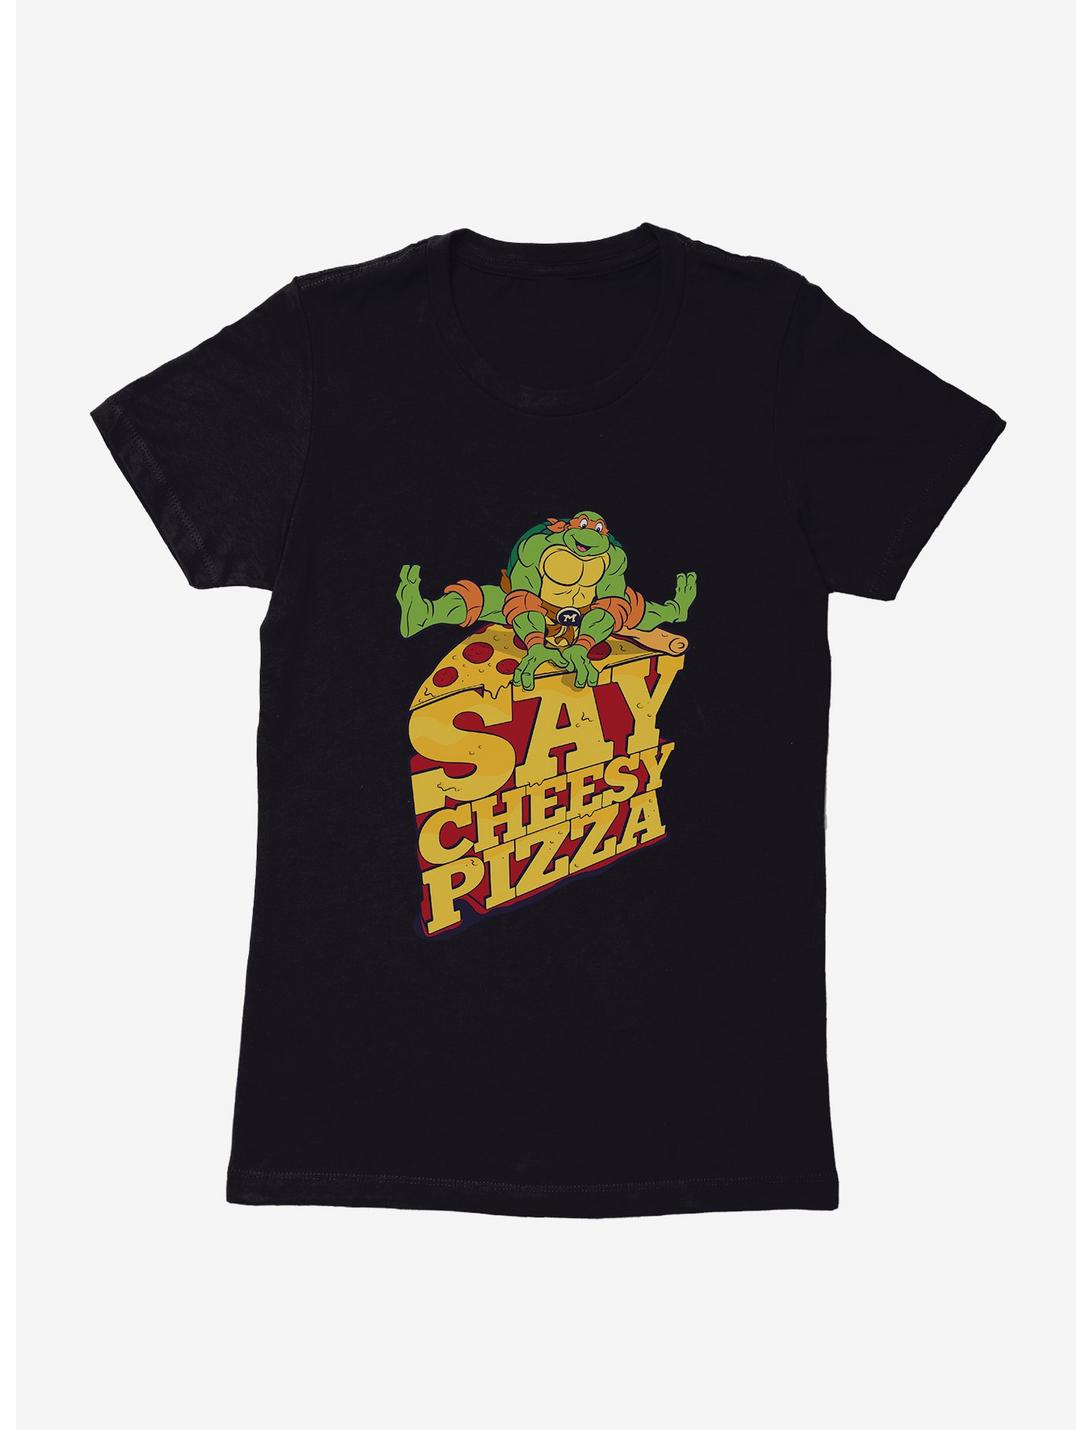 Teenage Mutant Ninja Turtles Say Cheesy Pizza Womens T-Shirt, BLACK, hi-res